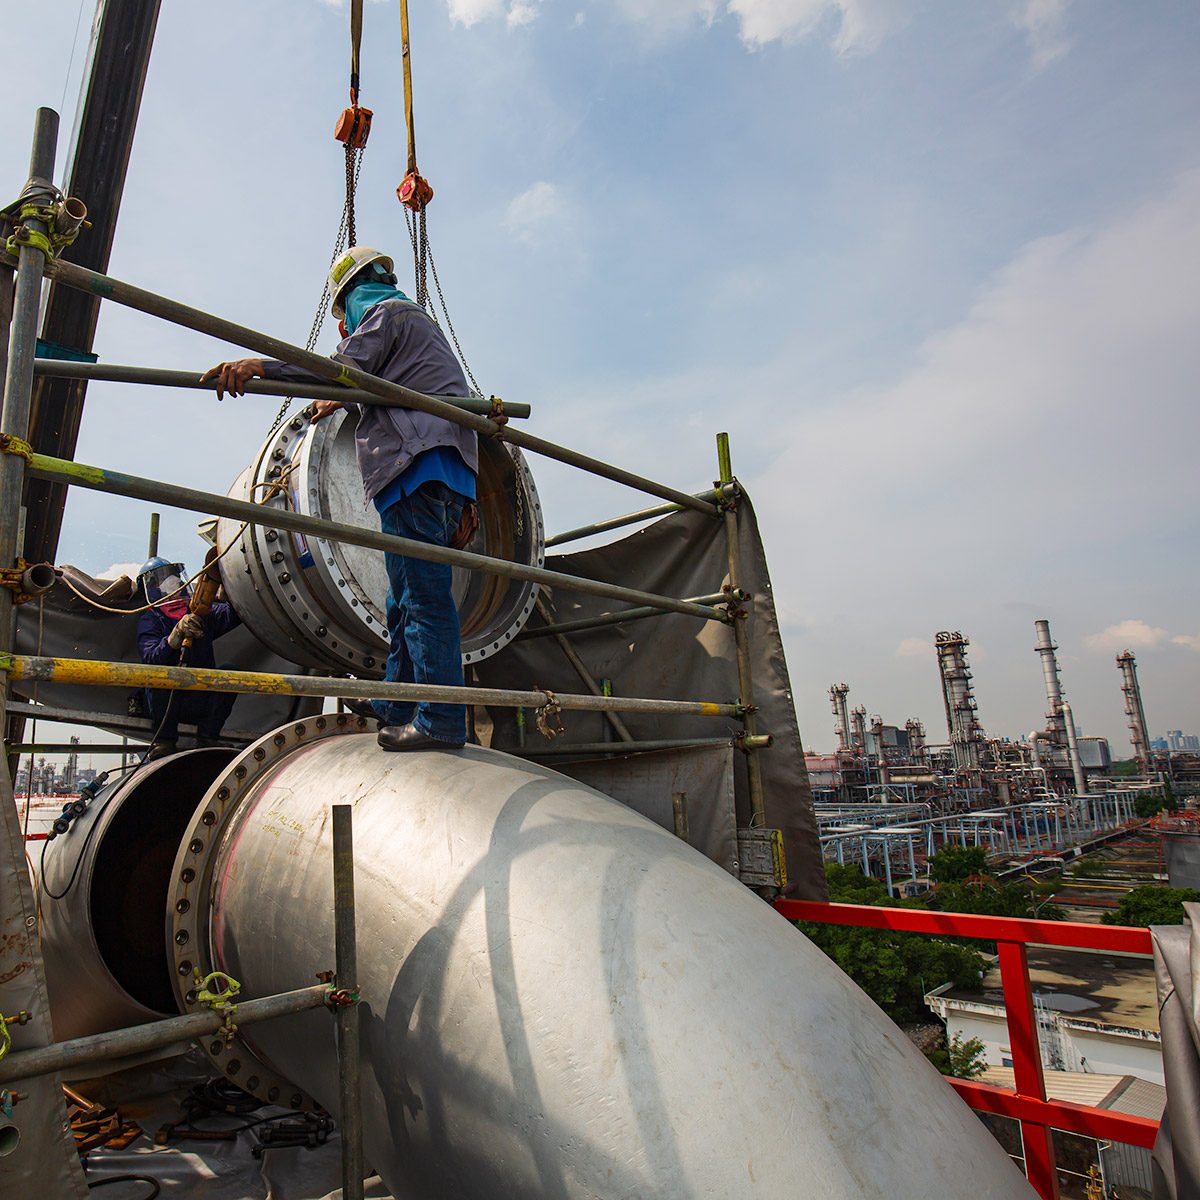 male-worker-slinger-crane-work-unloading-by-crane-production-pipeline-big-oil-valve-equipment